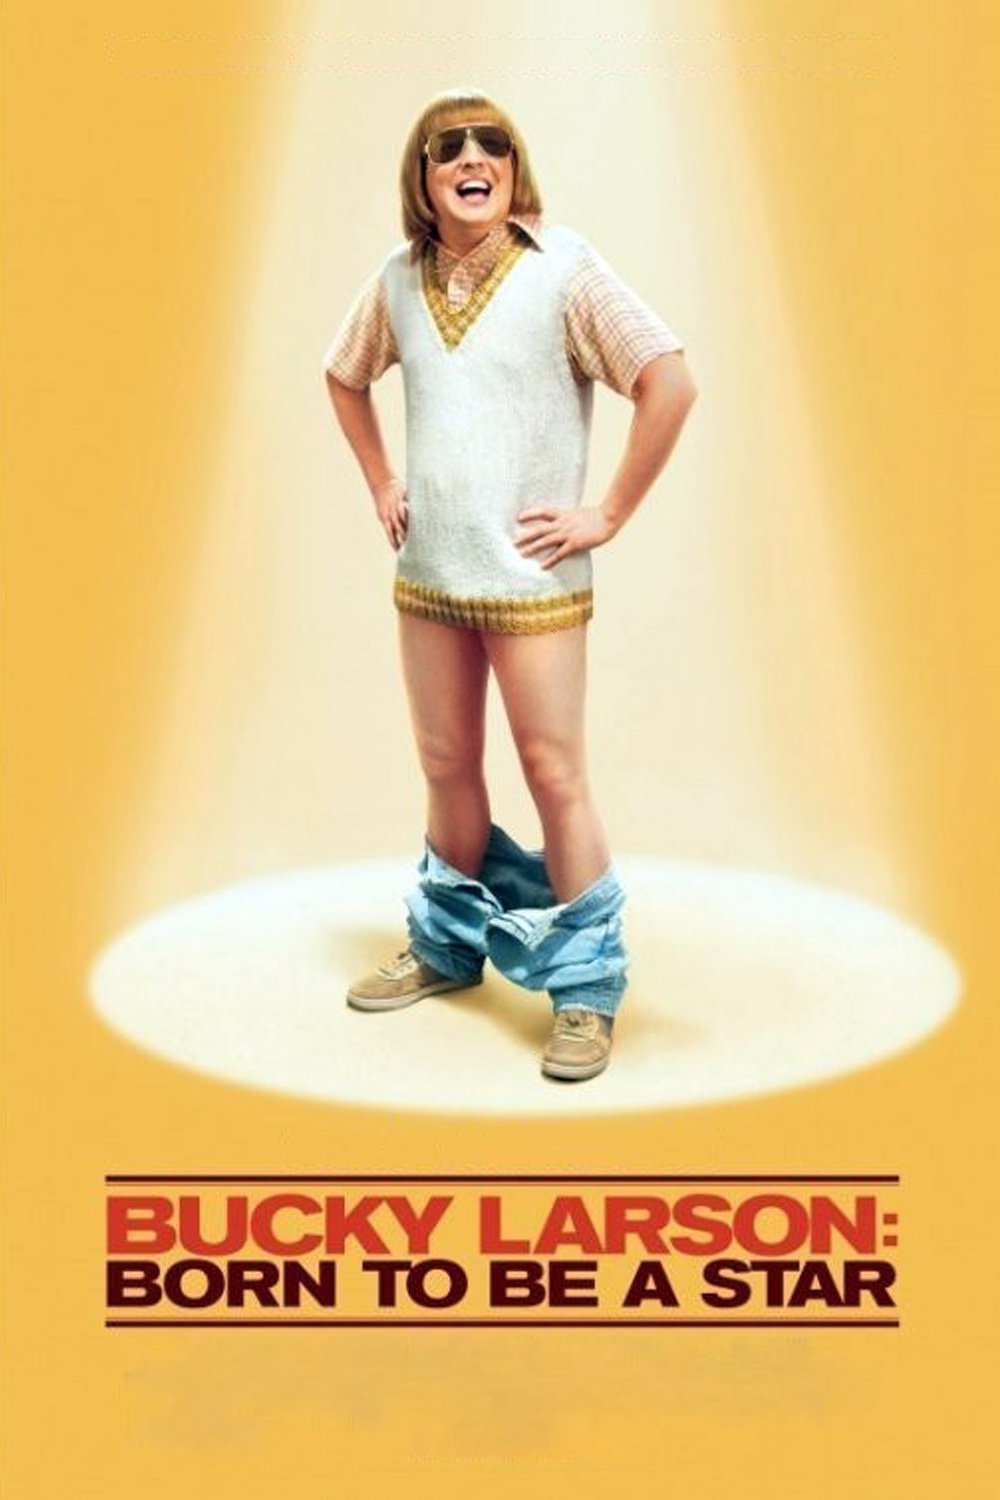 Plakat von "Bucky Larson: Born to Be a Star"